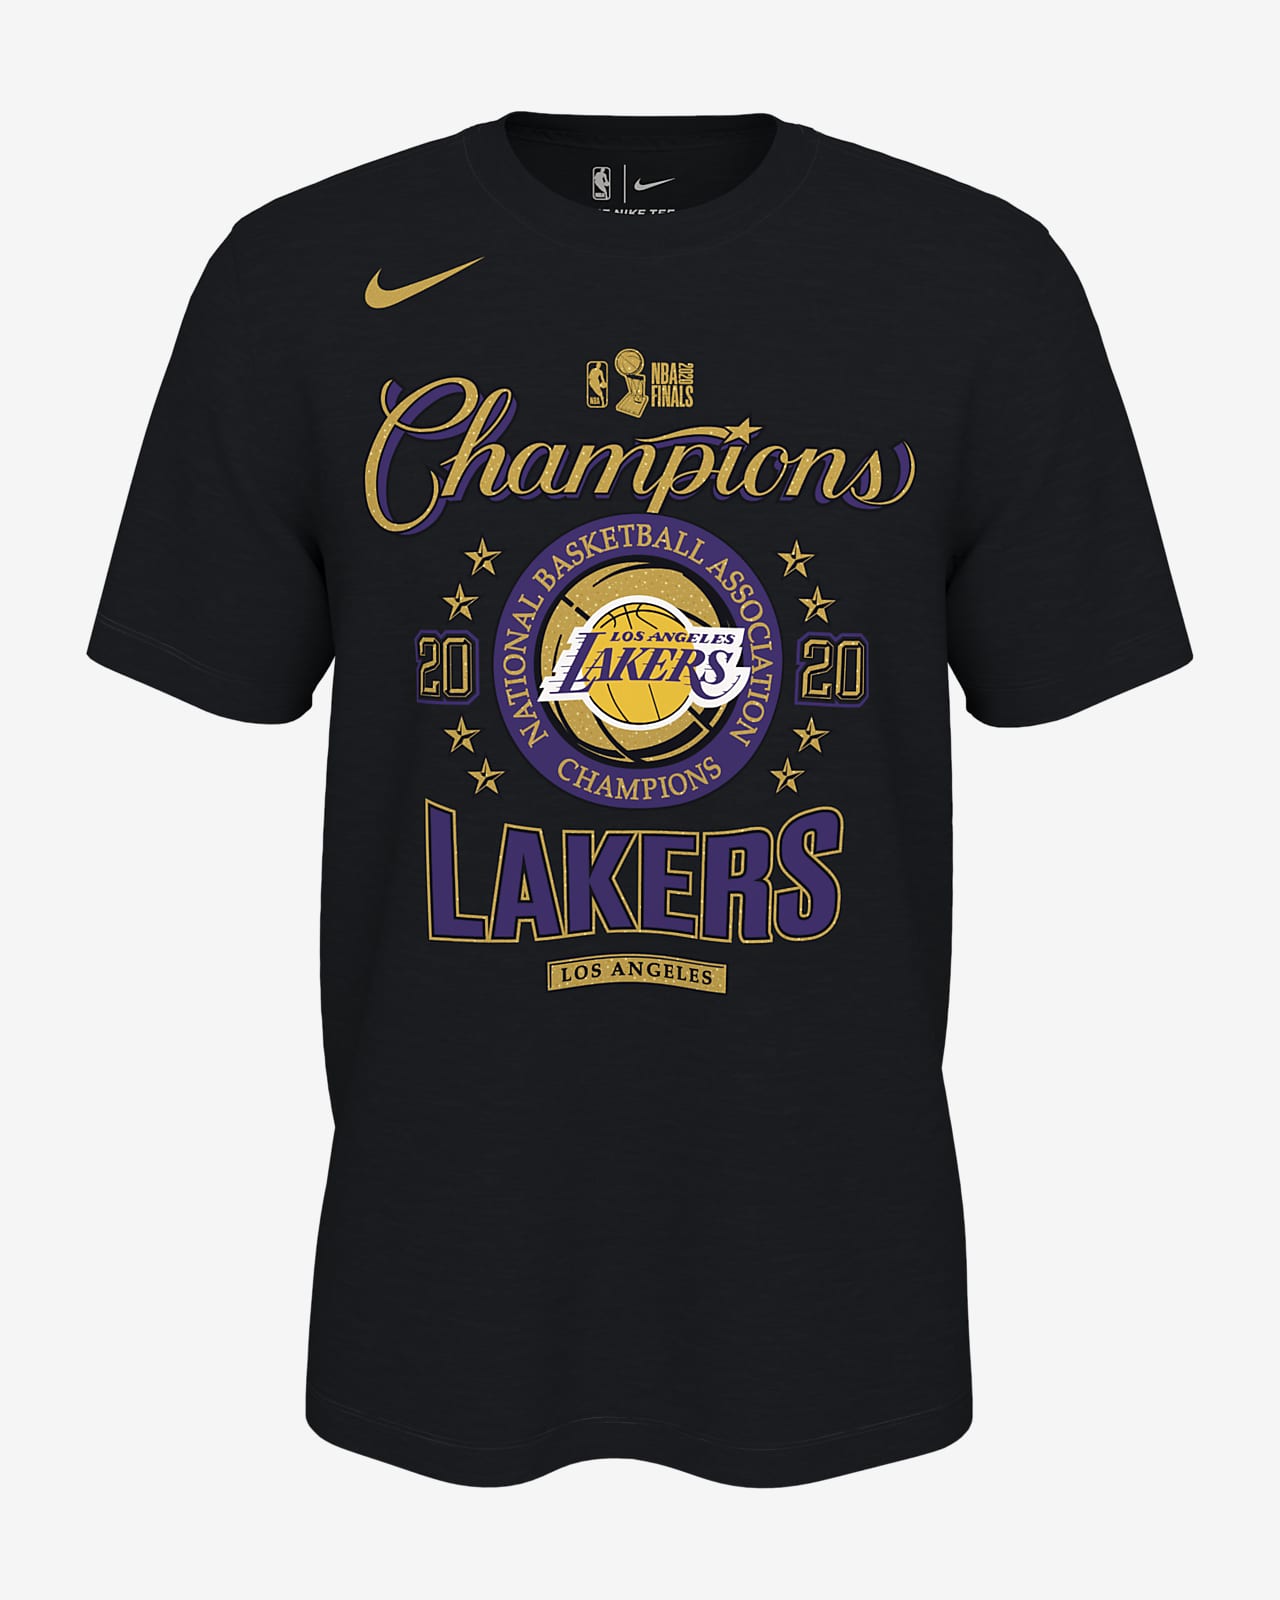 Los Angeles Lakers Champions Nike NBA 